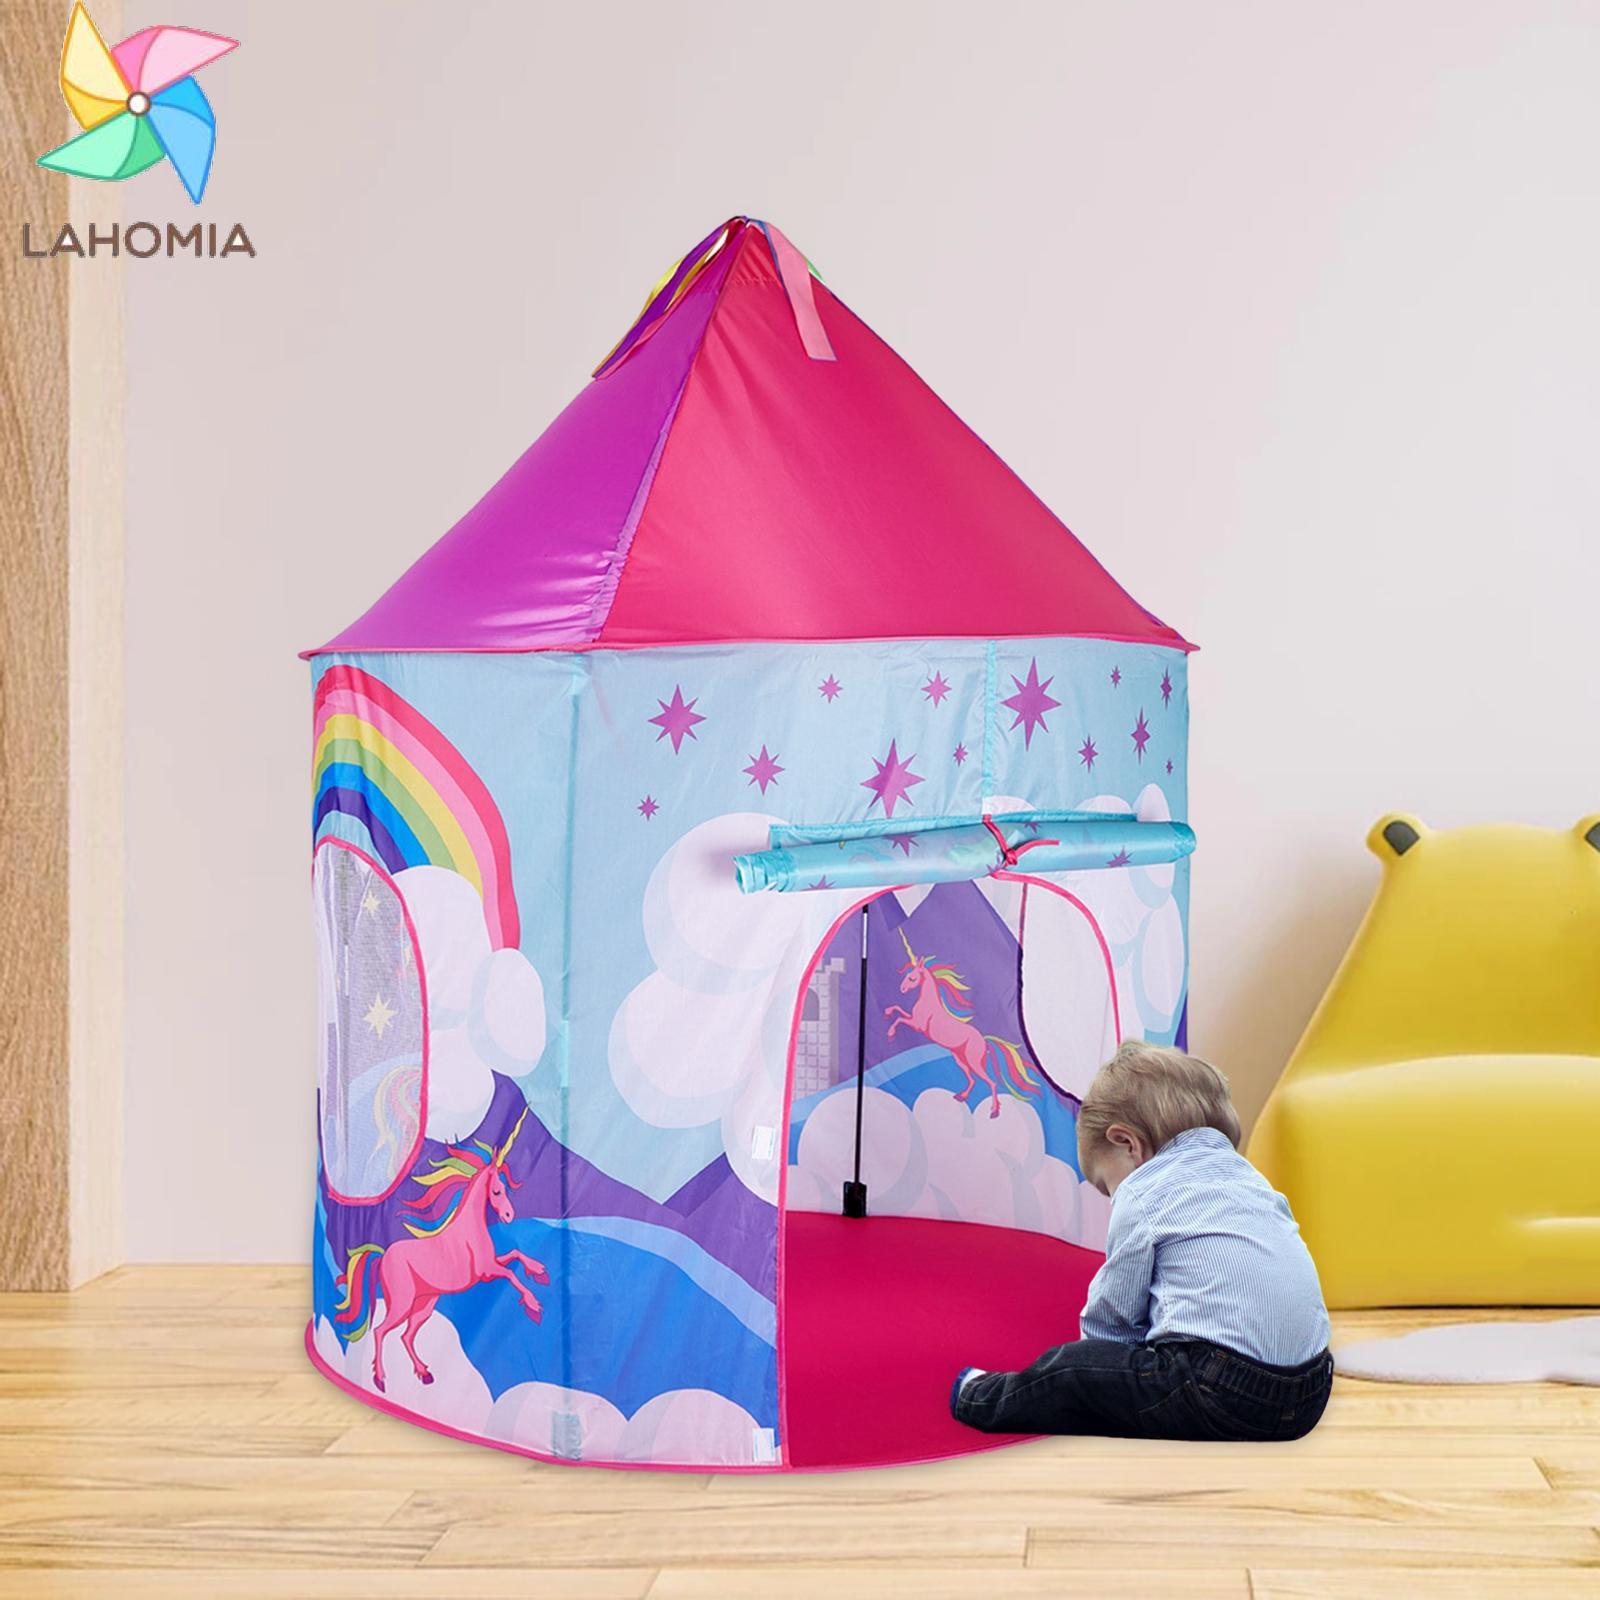 lahomia Kids Castle Play Tent Princess Tent Portable Large Foldable Teepee